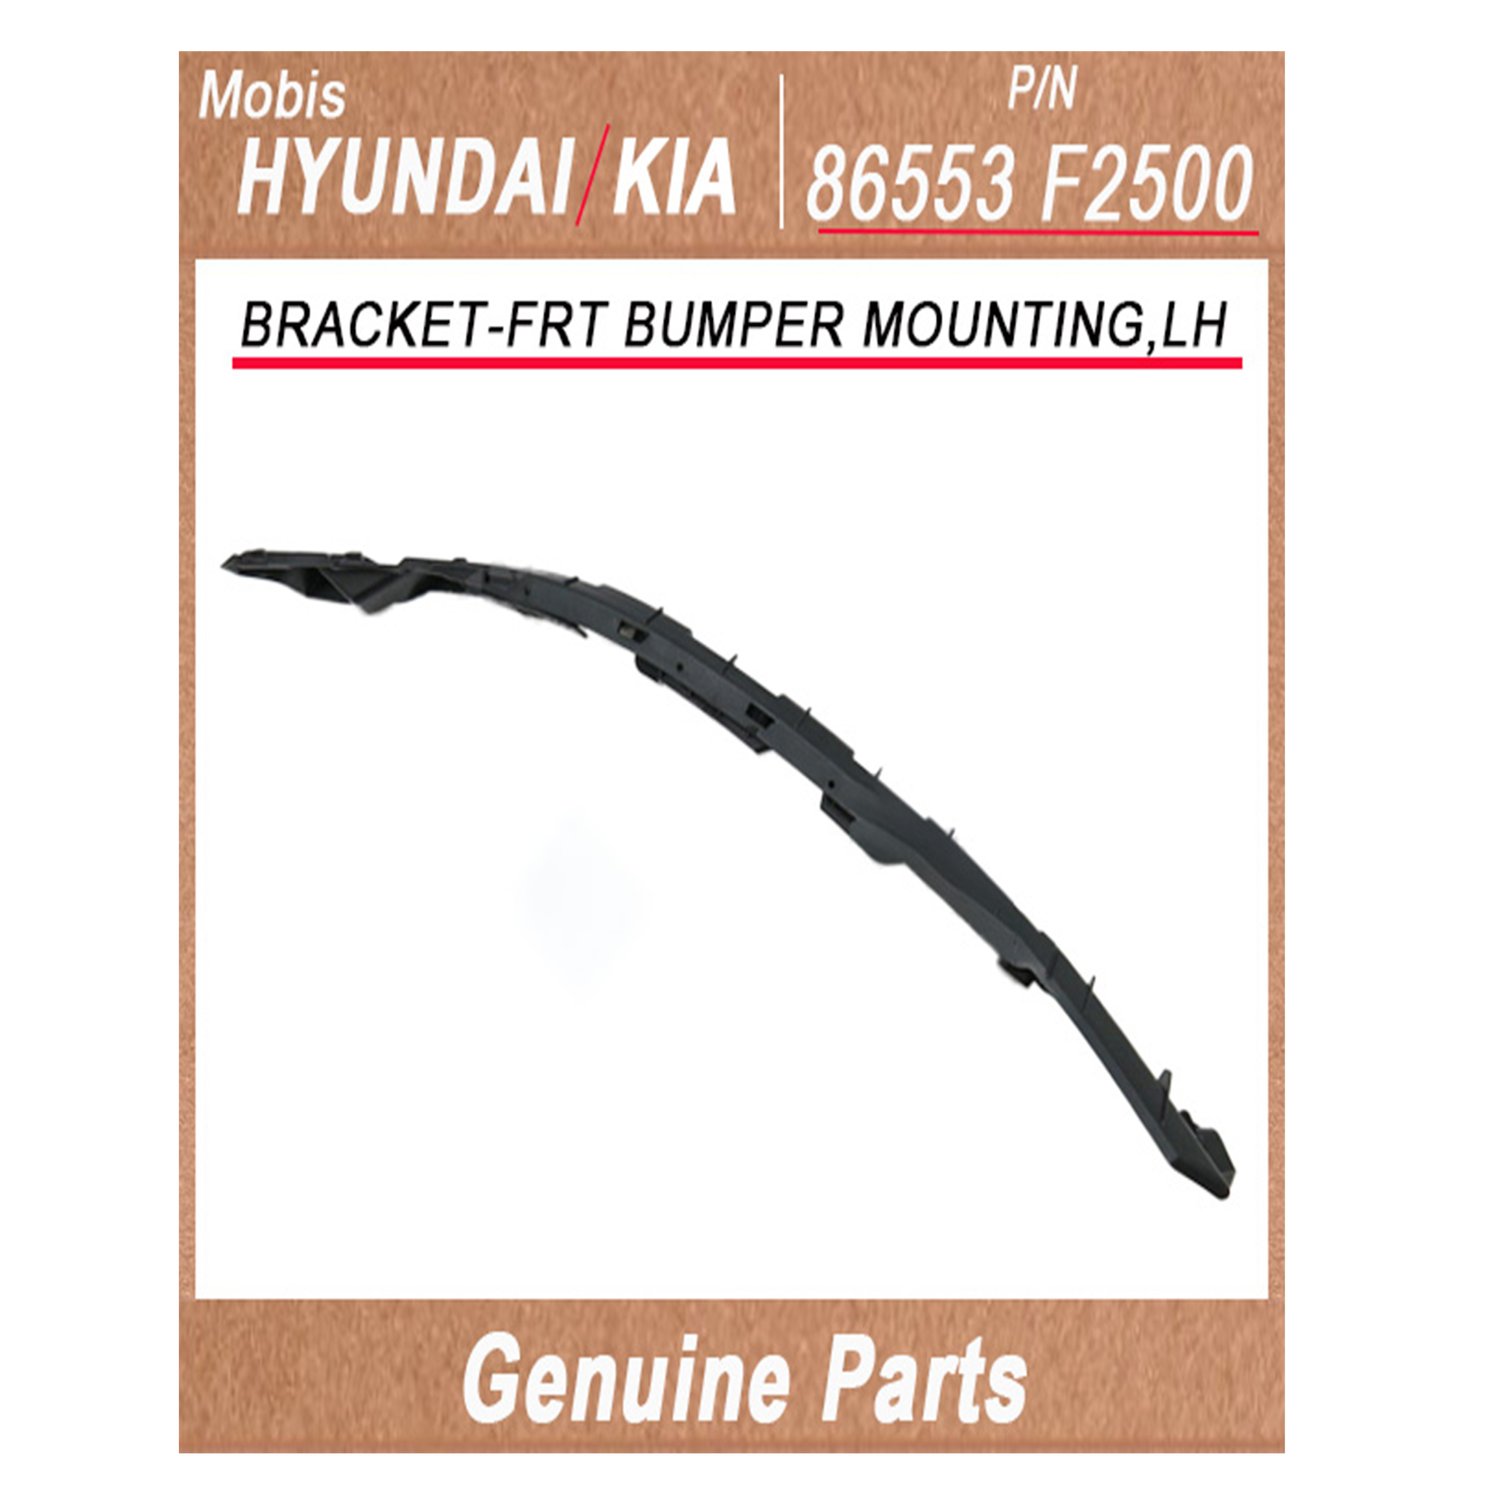 86553F2500 _ BRACKET_FRT BUMPER MOUNTING_LH _ Genuine Korean Automotive Spare Parts _ Hyundai Kia _M